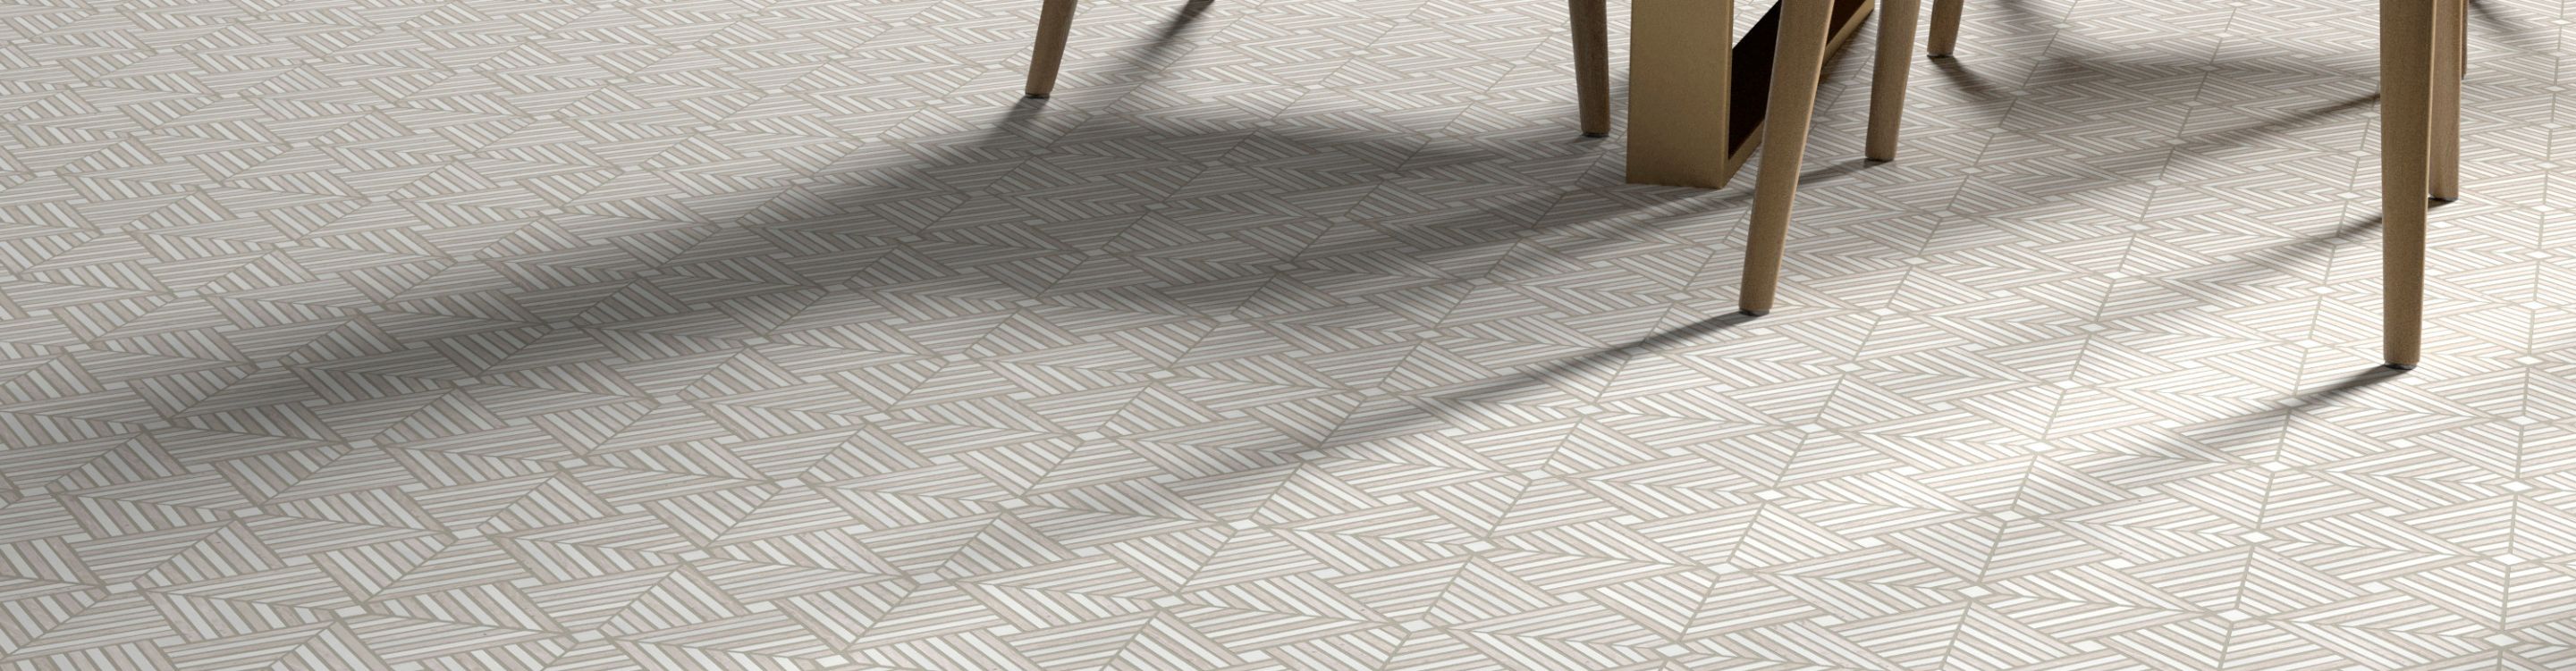 mosaic tile flooring